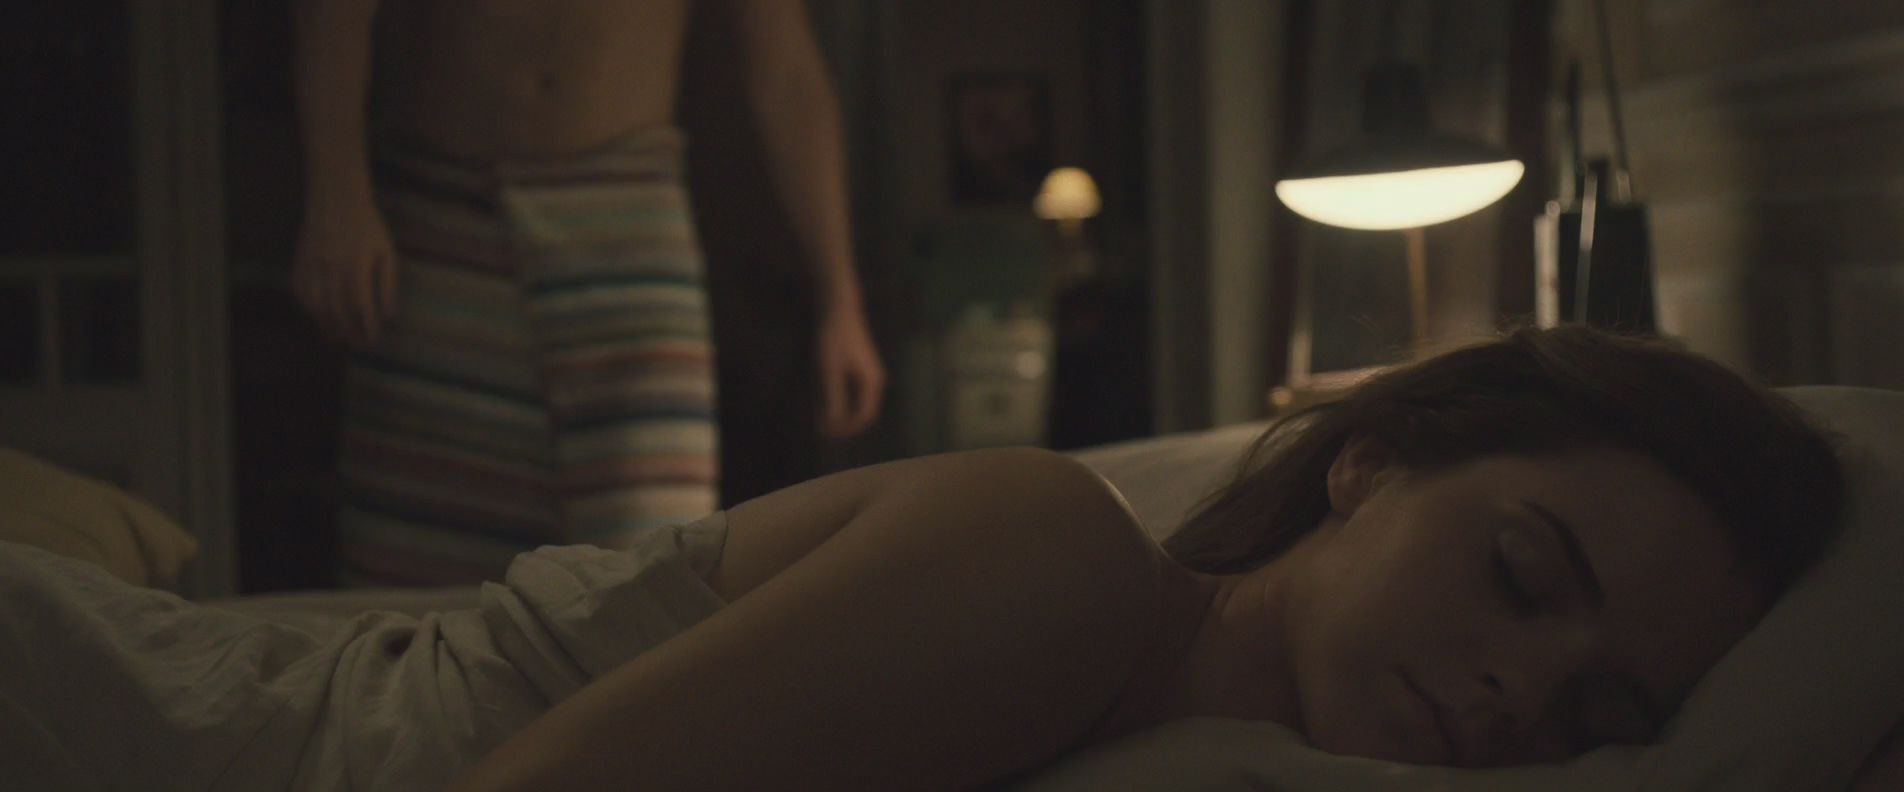 Emma Watson - Colonia (2015) "Lingerie/Hot" Scene HD 1080p. 